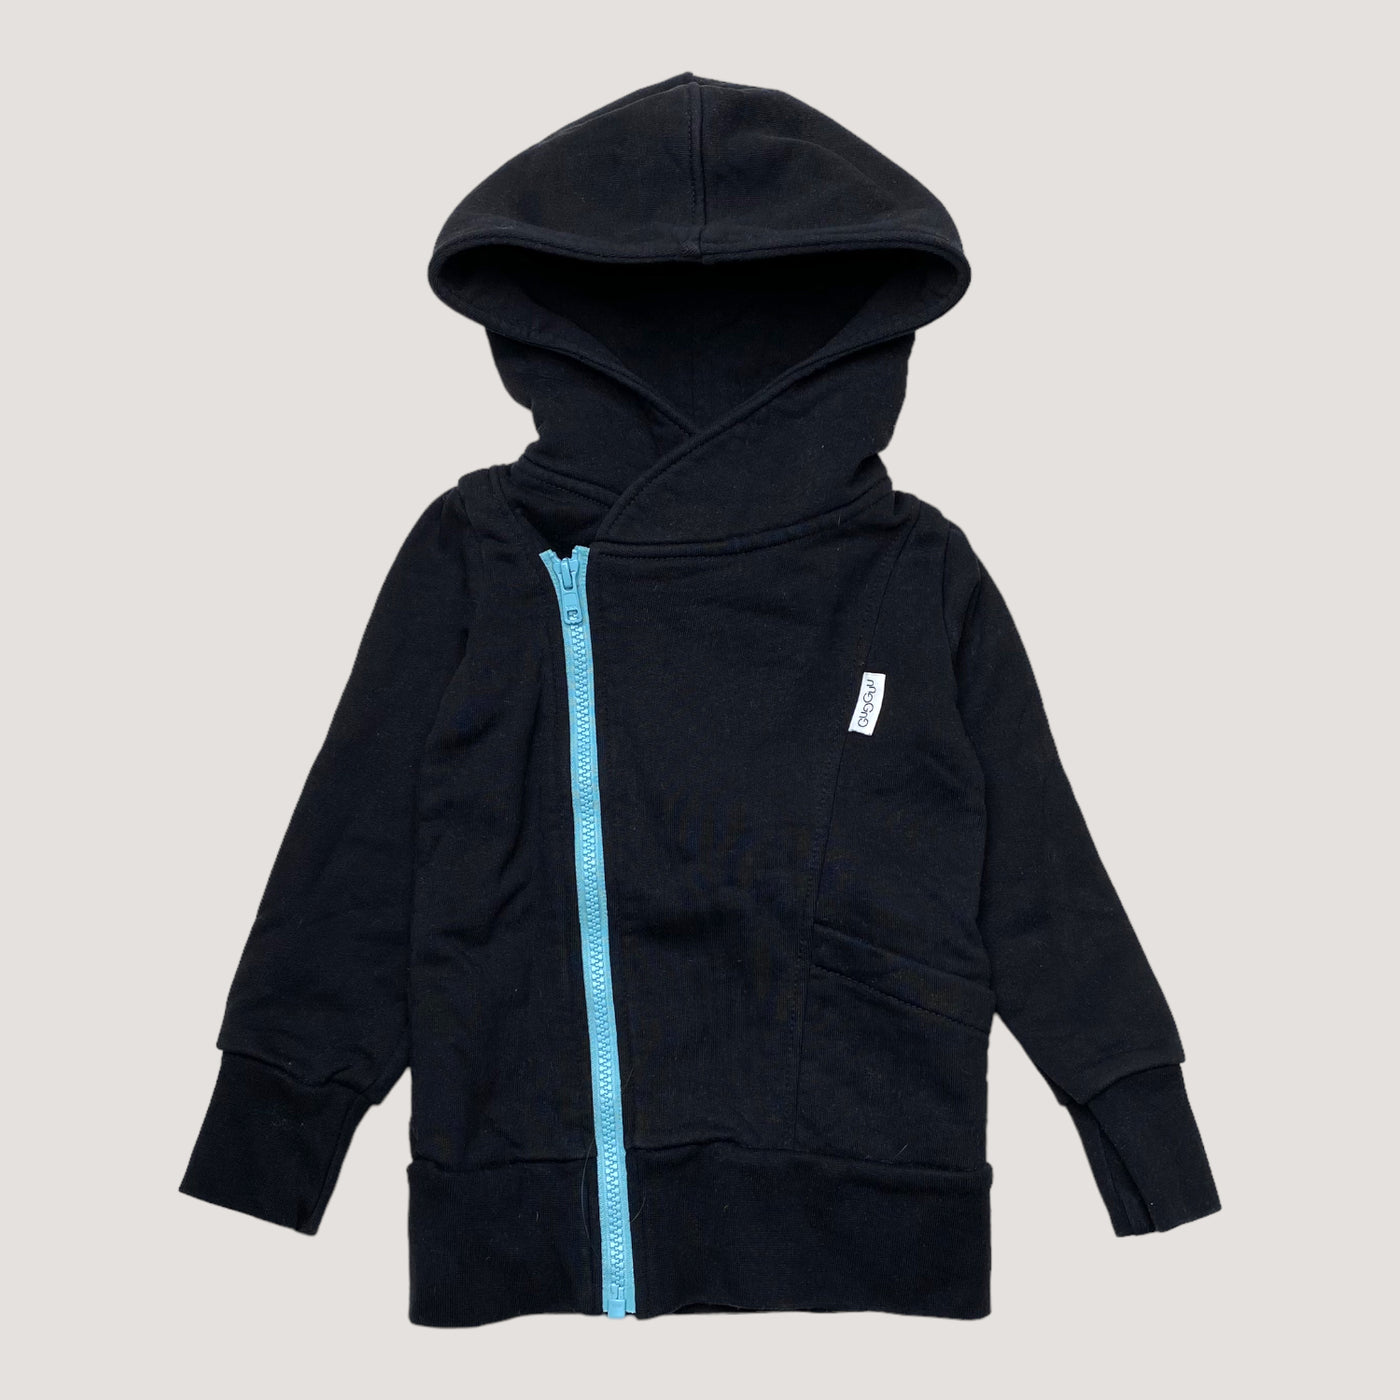 Gugguu zipper hoodie, black | 98cm